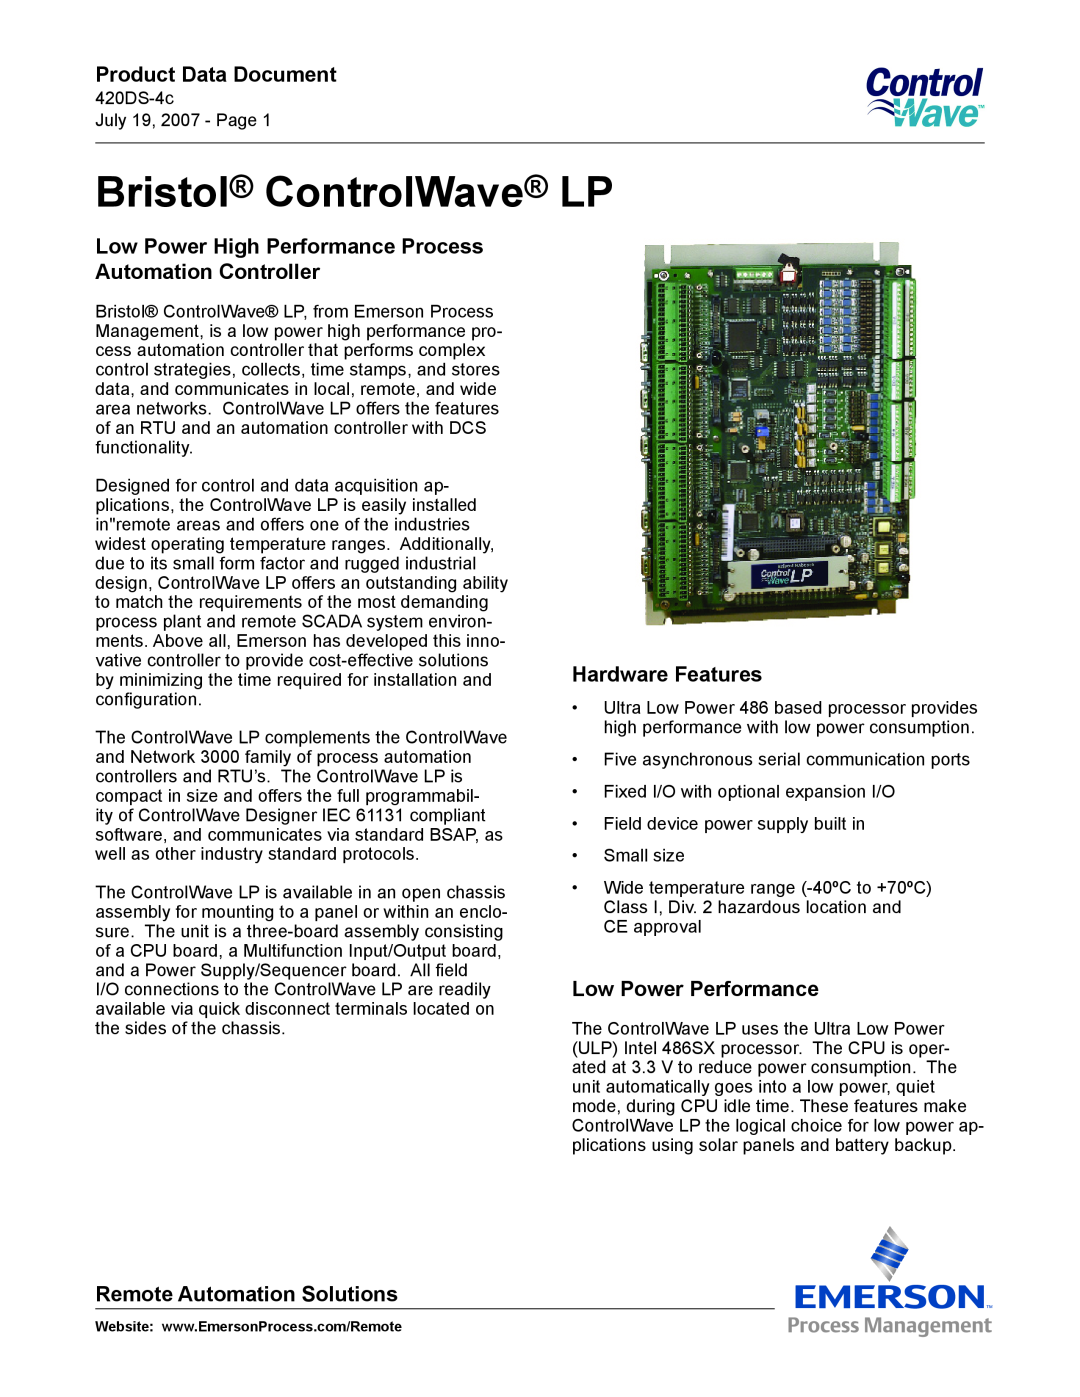 Emerson Process Management ControlWave LP manual Product Data Document, Hardware Features, Low Power Performance 